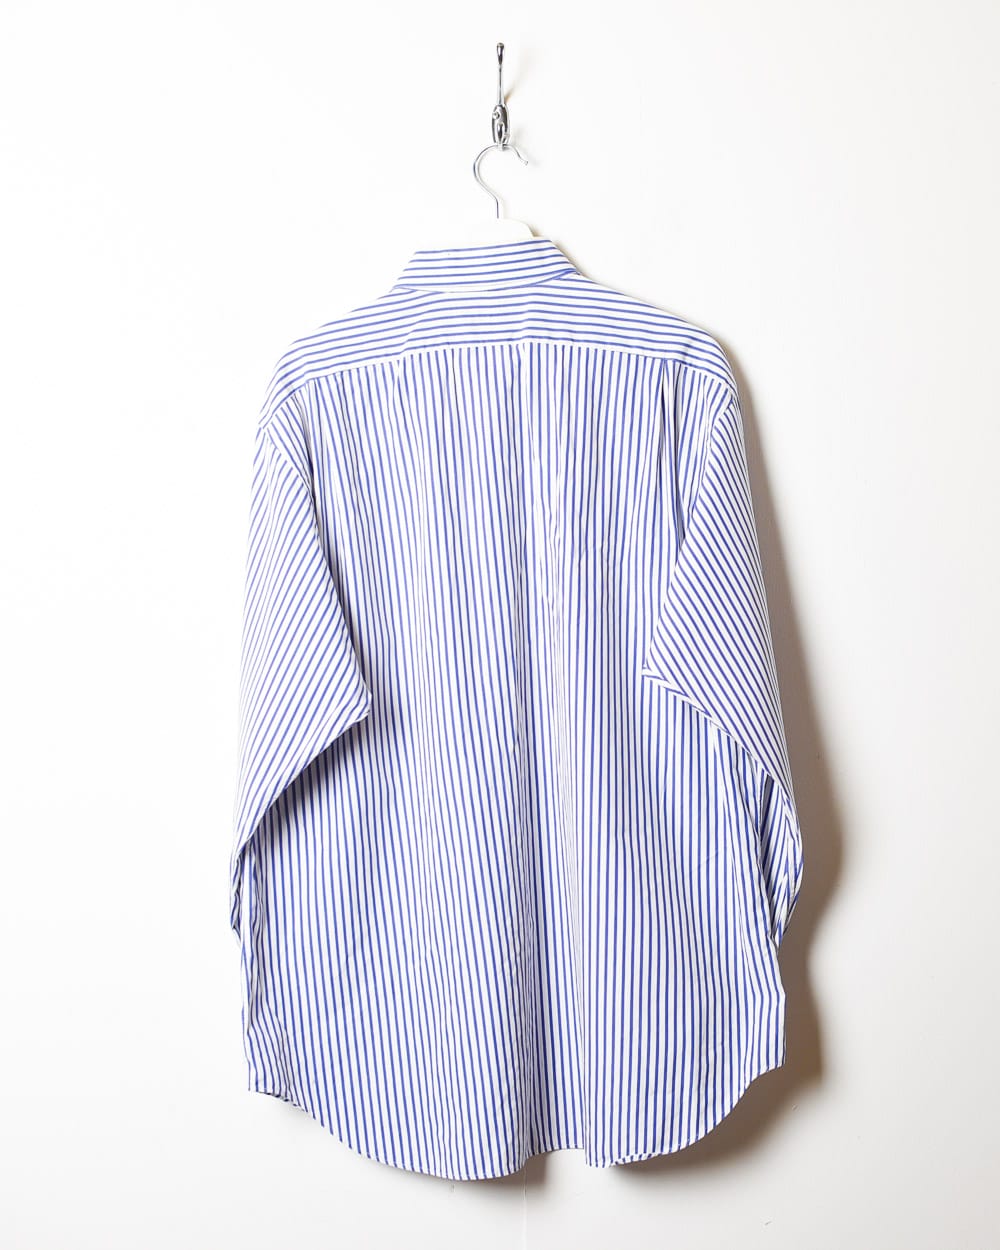 Blue Polo Ralph Lauren Regent Striped Shirt - X-Large